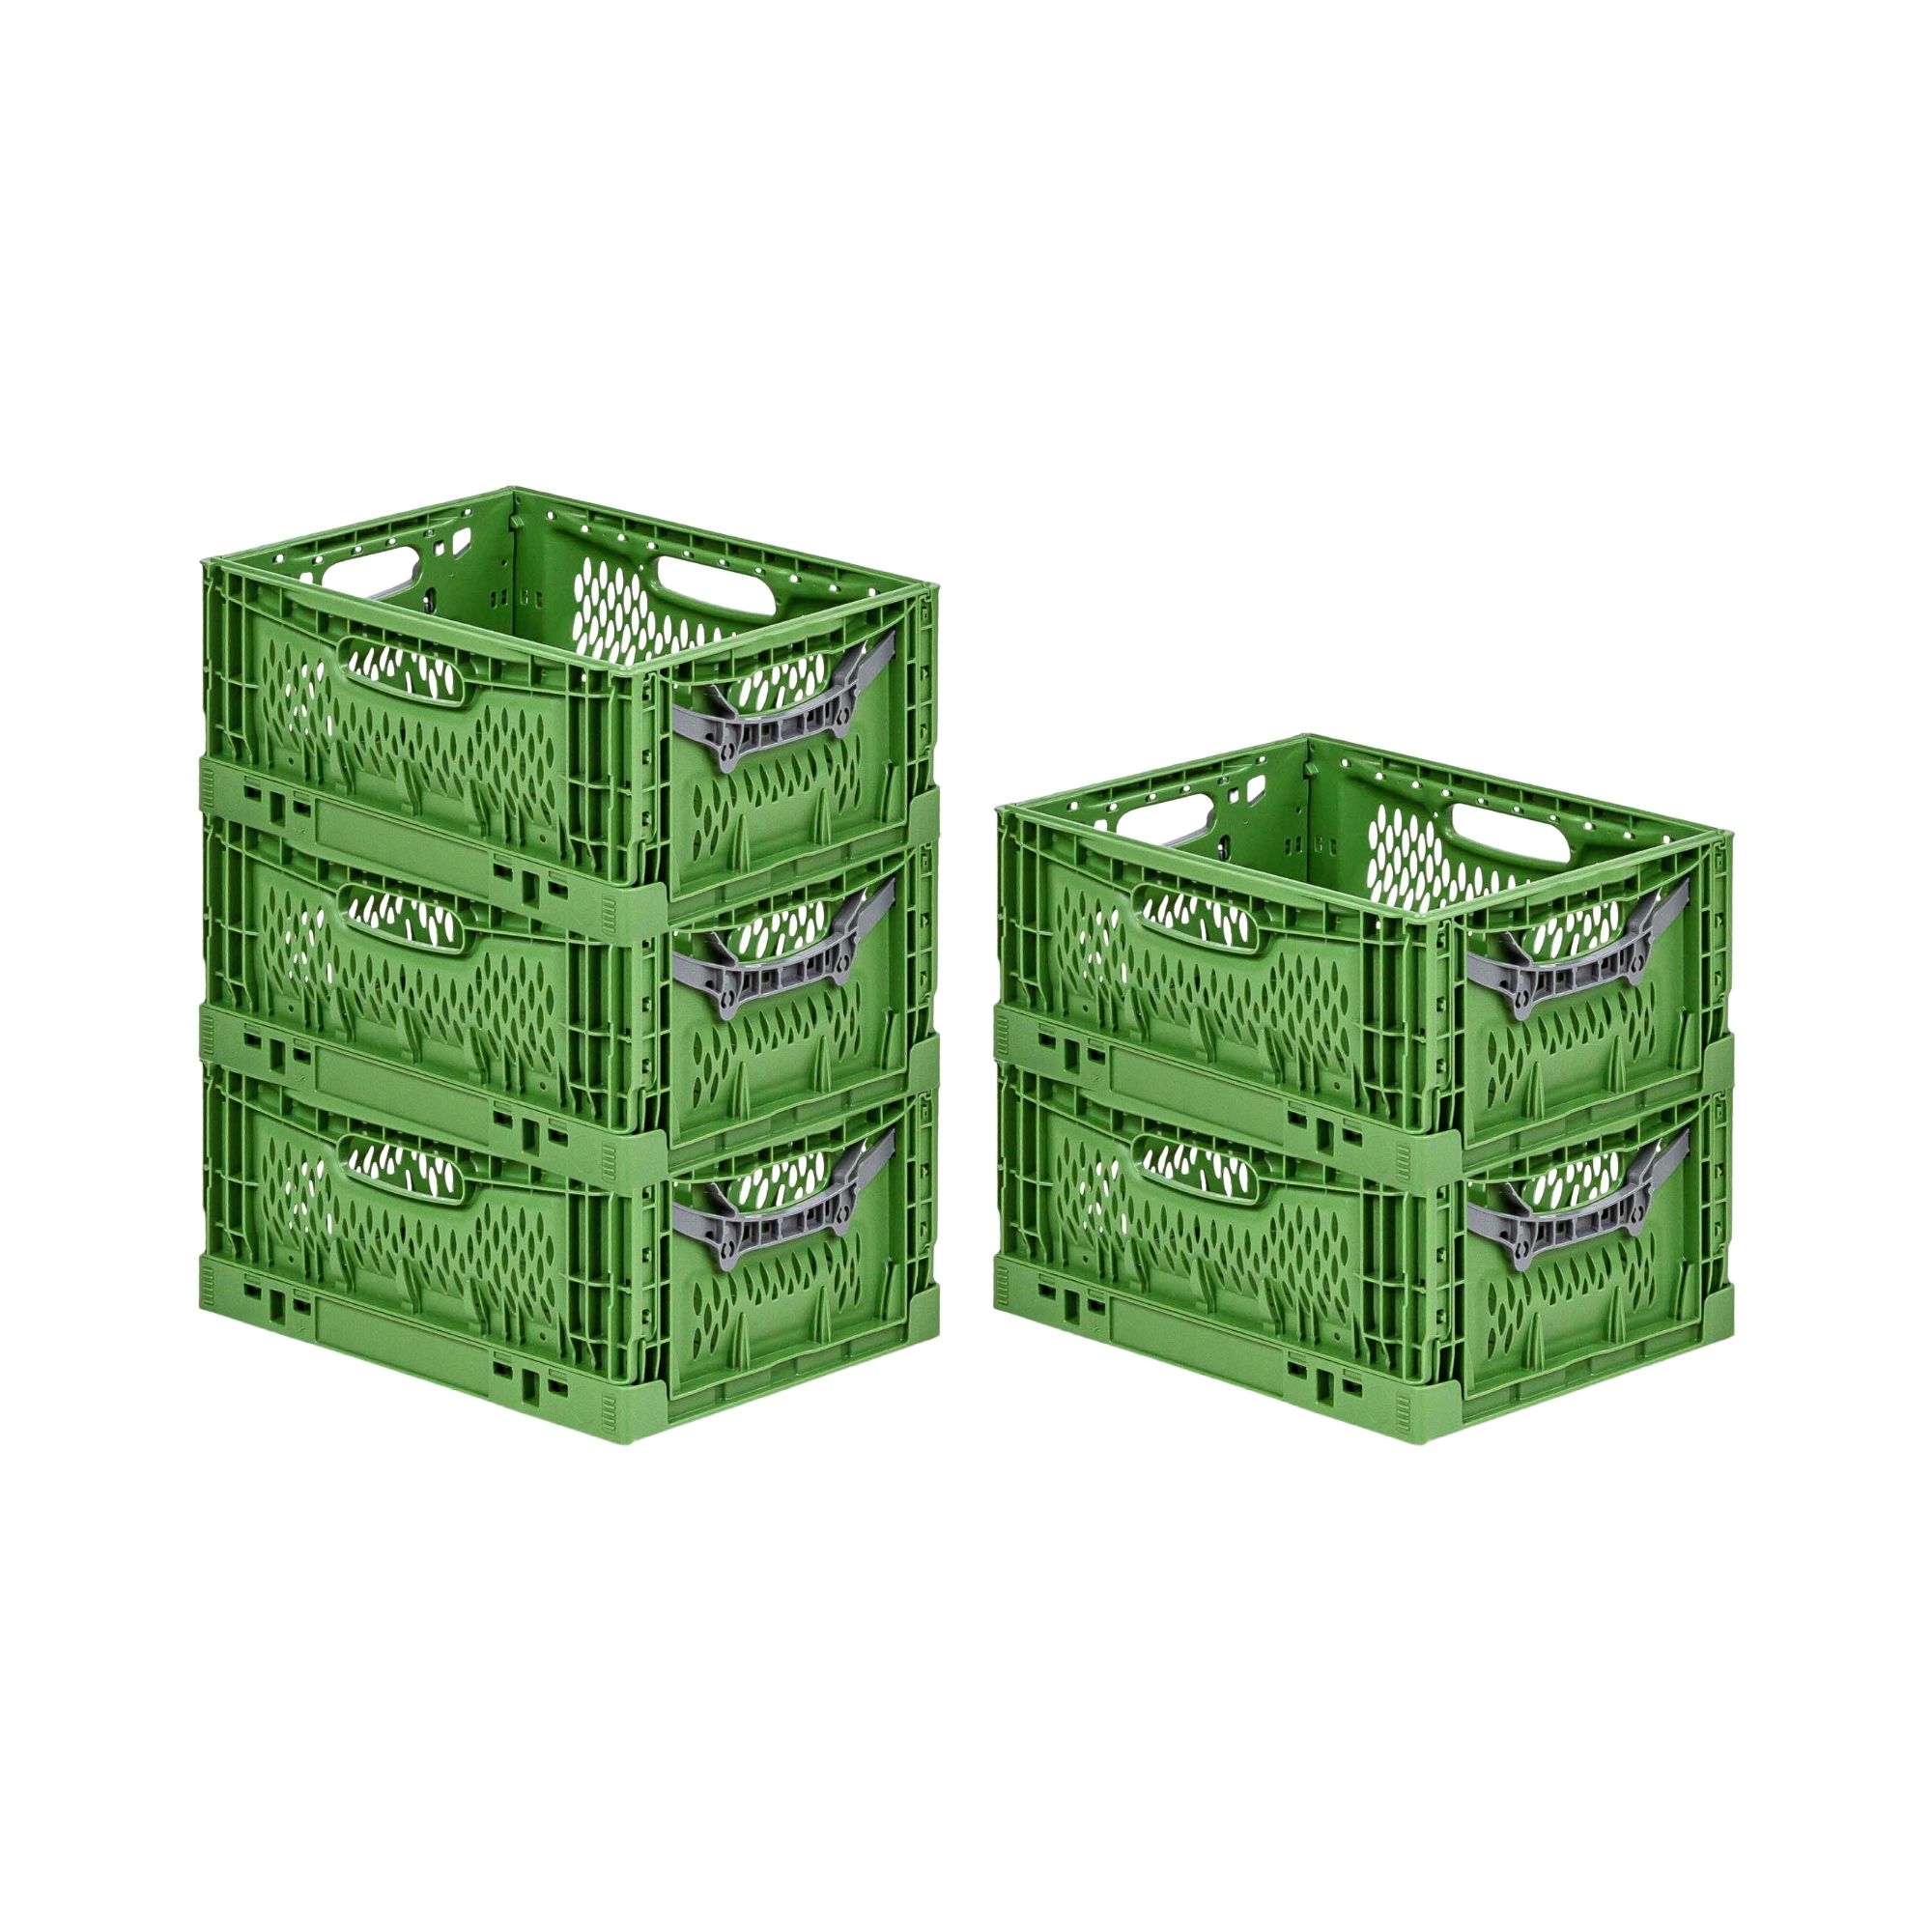 SuperSparSet 5x Stabile Profi-Klappbox Chameleon in Industriequalität | HxBxT 18x30x40cm | 17 Liter | klappbar stapelbar durchbrochen lebensmittelecht | Eurobox Eurobehälter Transportbehälter Stapelbehlter Faltbox